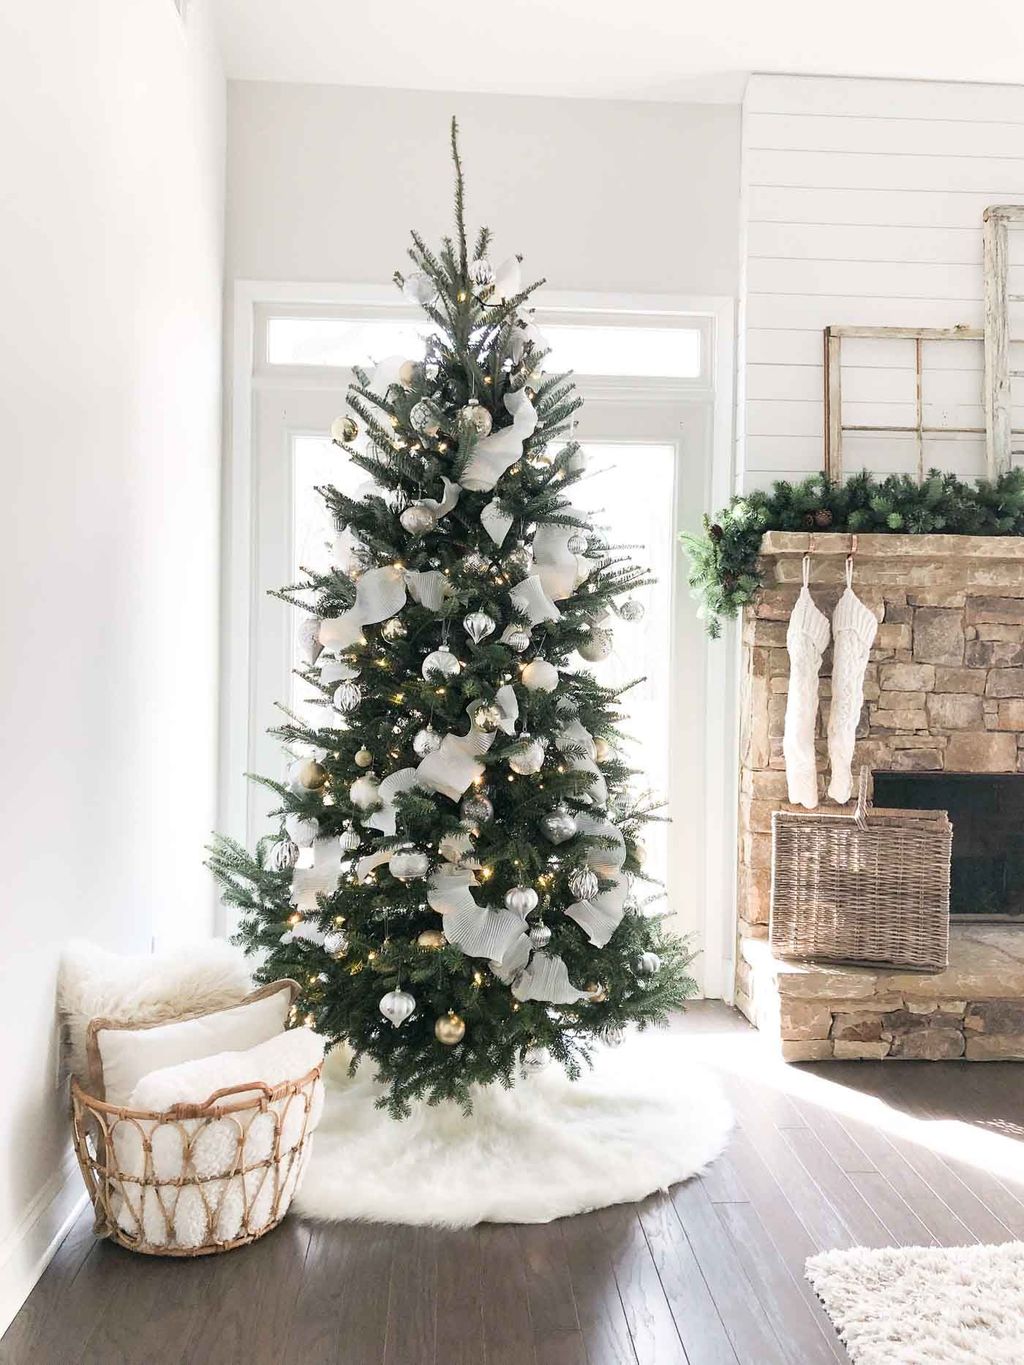 33 Amazing Winter Christmas Tree Design And Decor Ideas - MAGZHOUSE